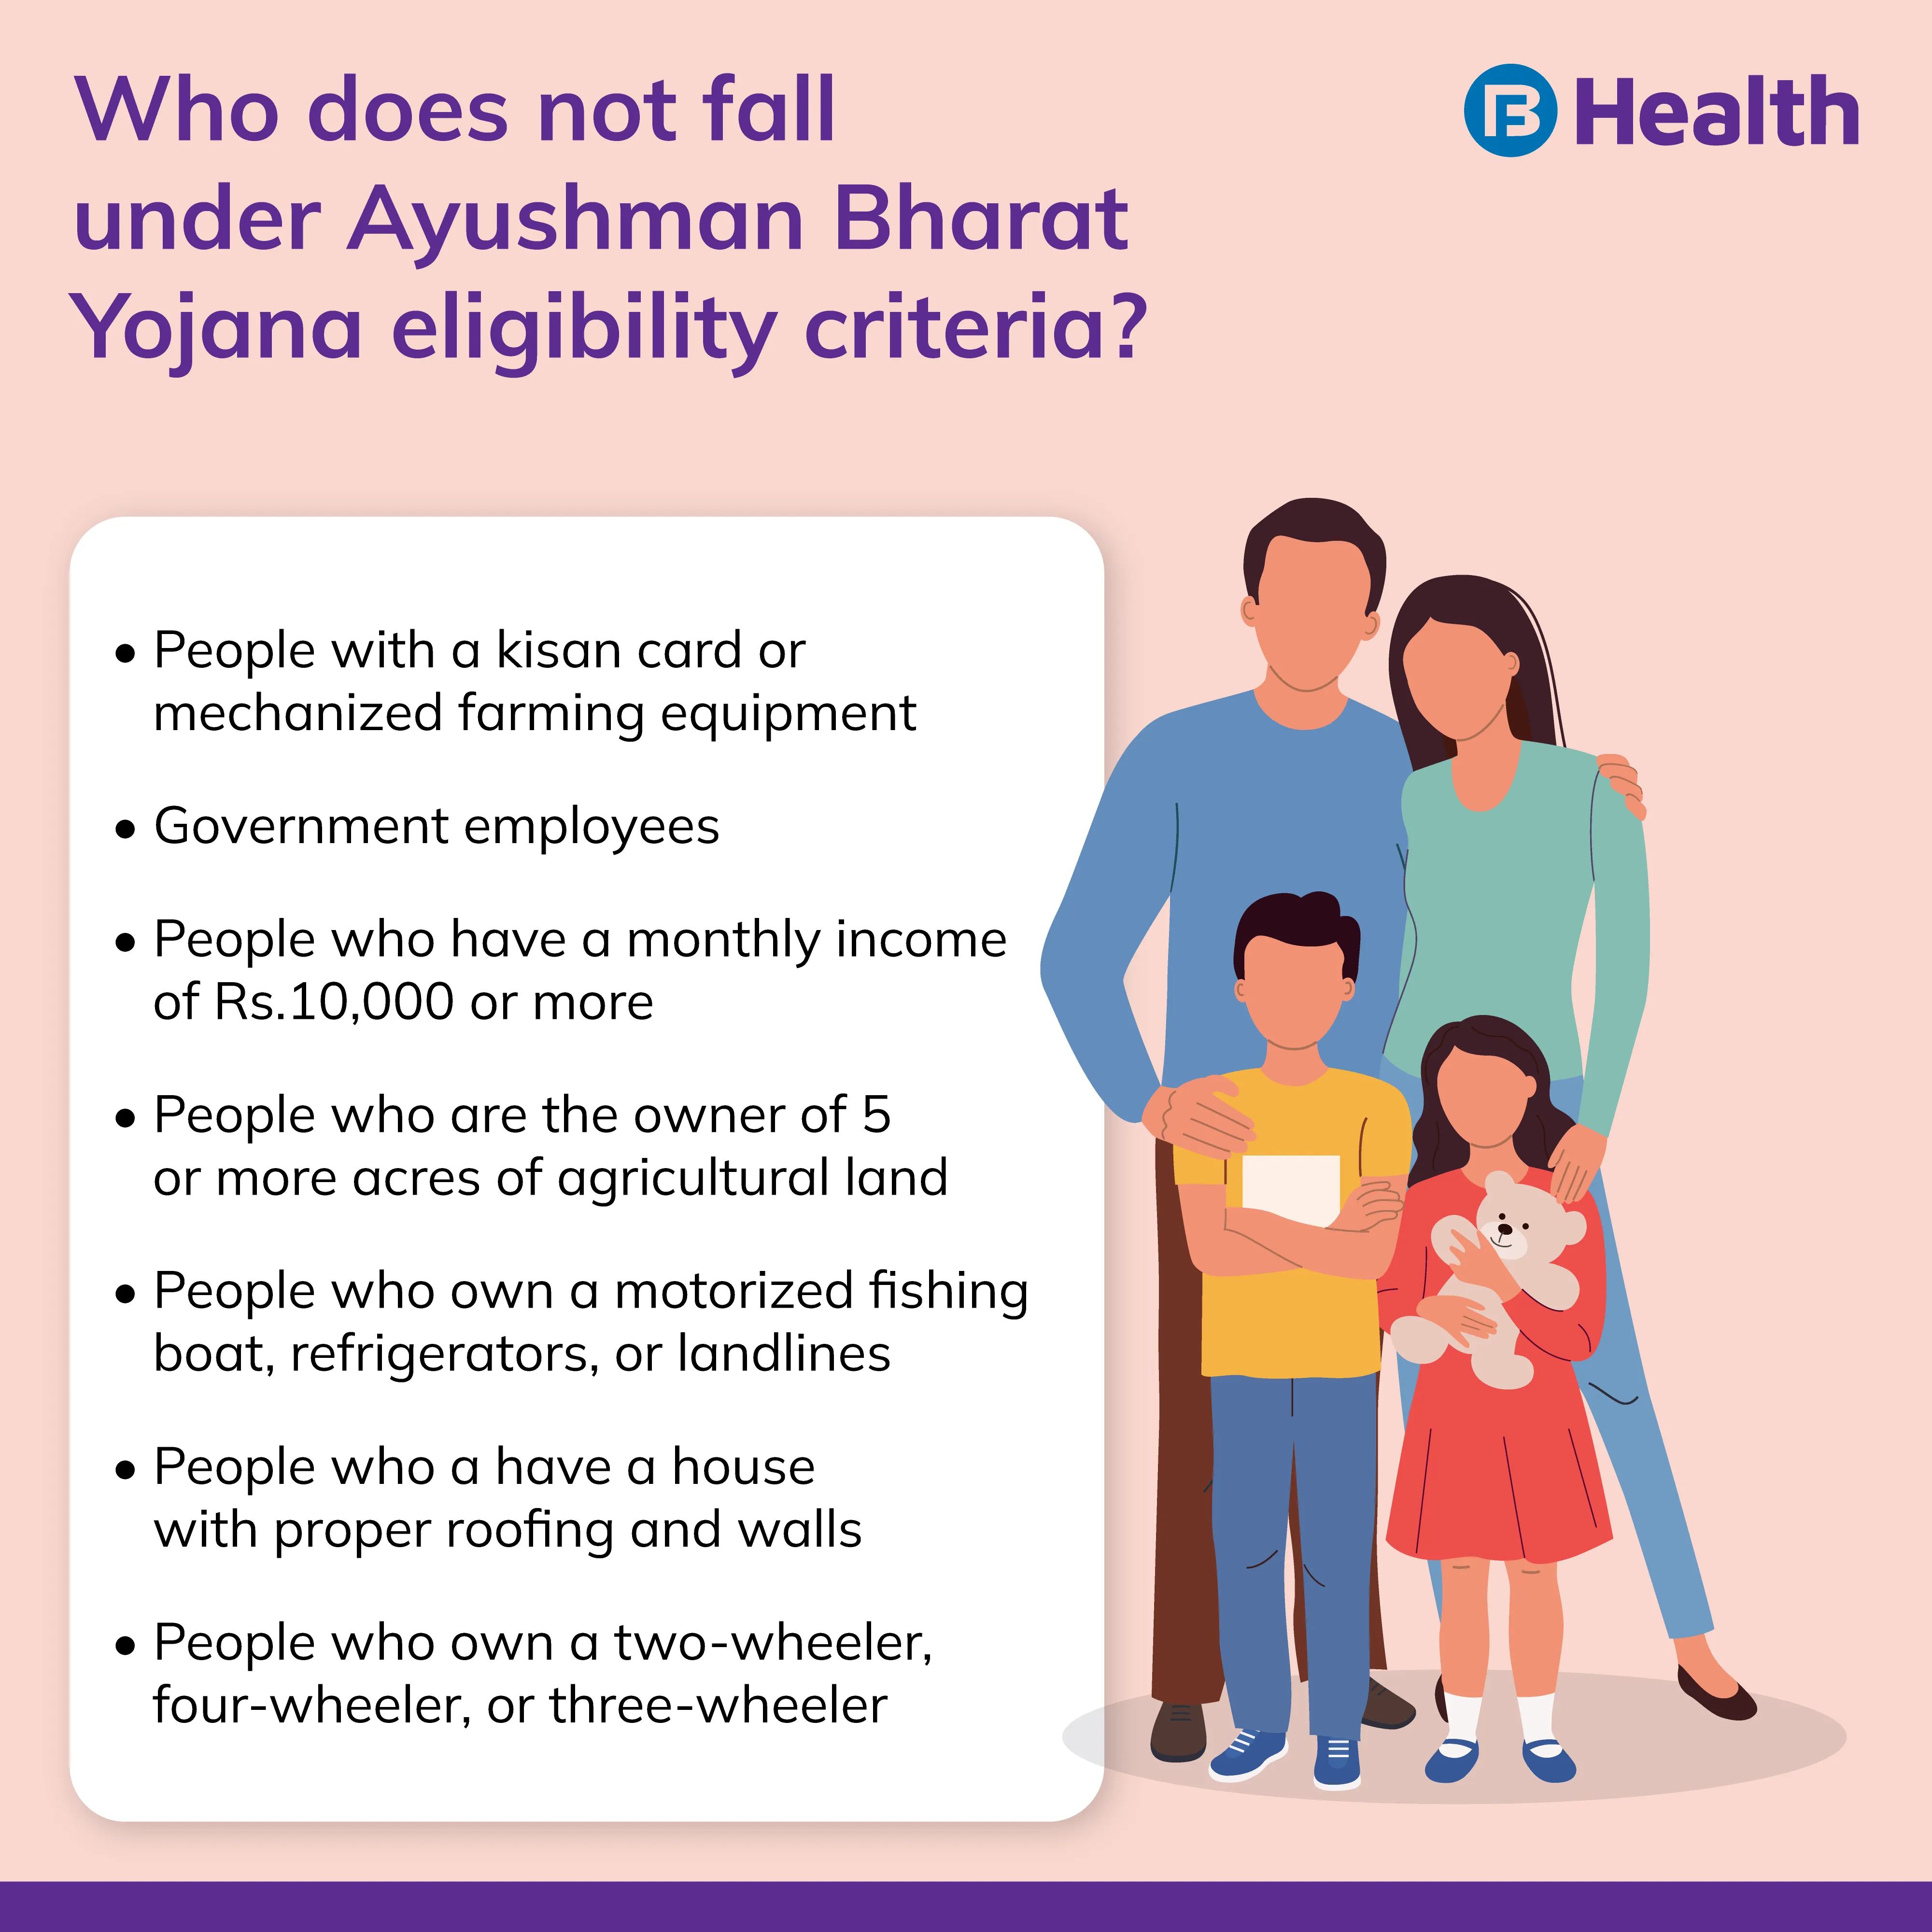 Eligibility criteria for Ayushman Bharat Yojana